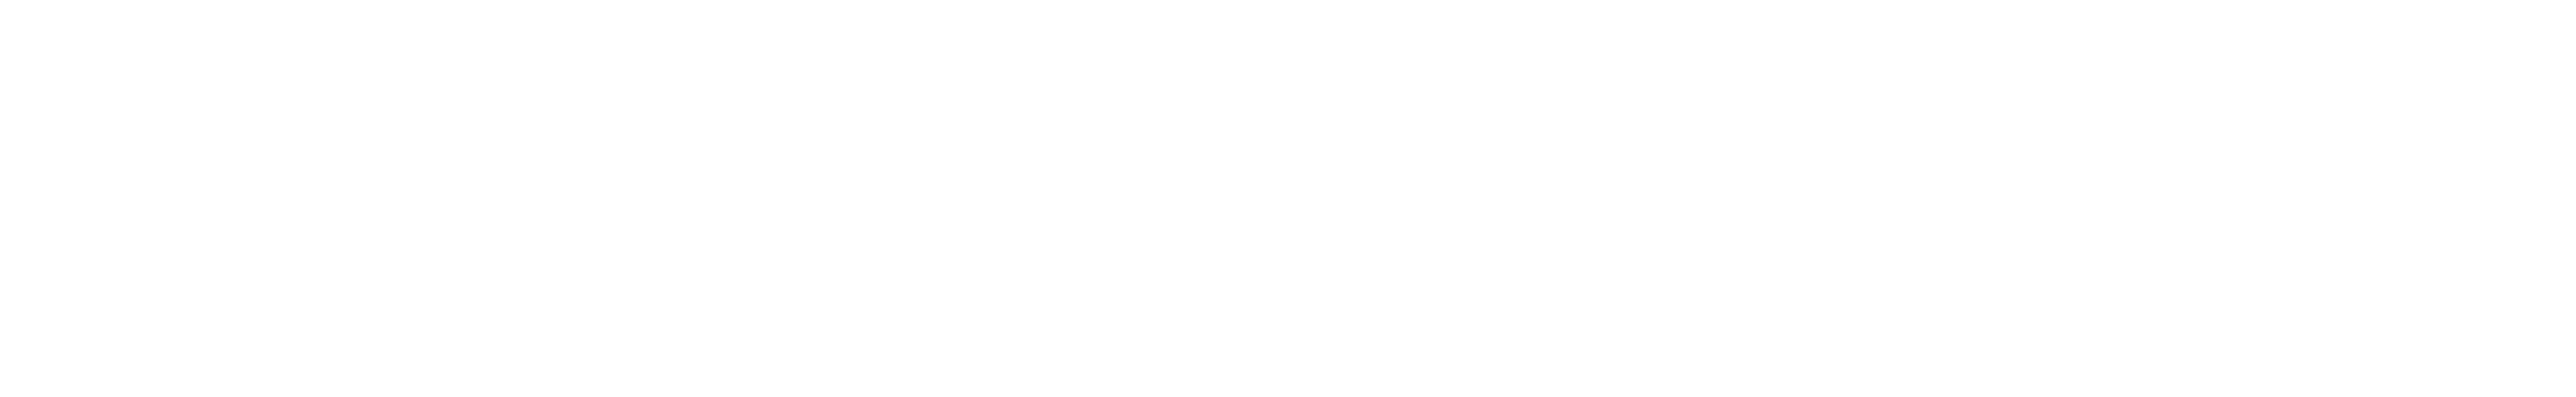 Verkle Labs logo